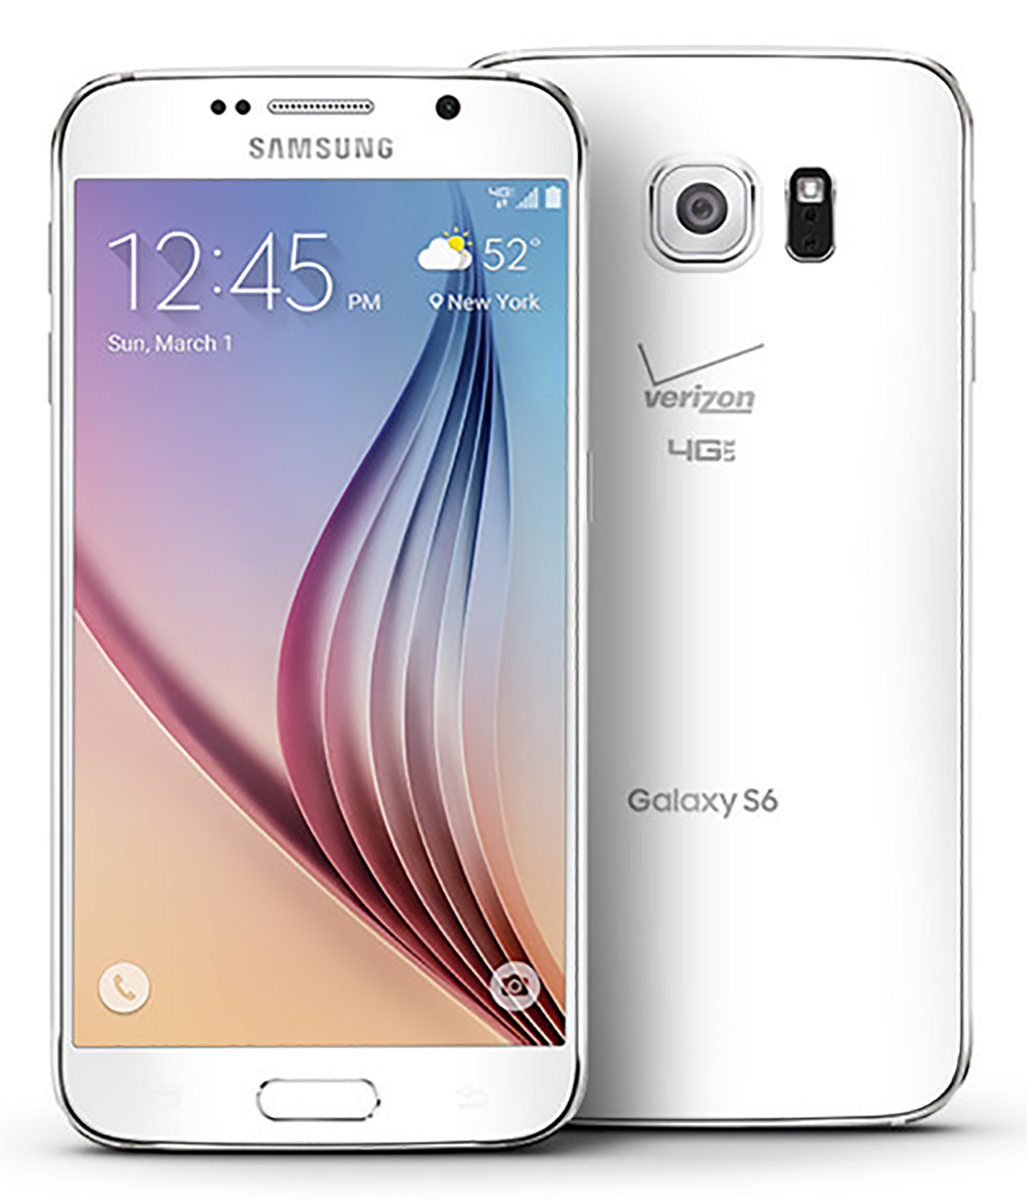 Samsung Galaxy S6 G920V 32GB Verizon CDMA 4G LTE Octa-Core Android Phone w/ 16MP Camera - White (Certified Used) - image 1 of 3